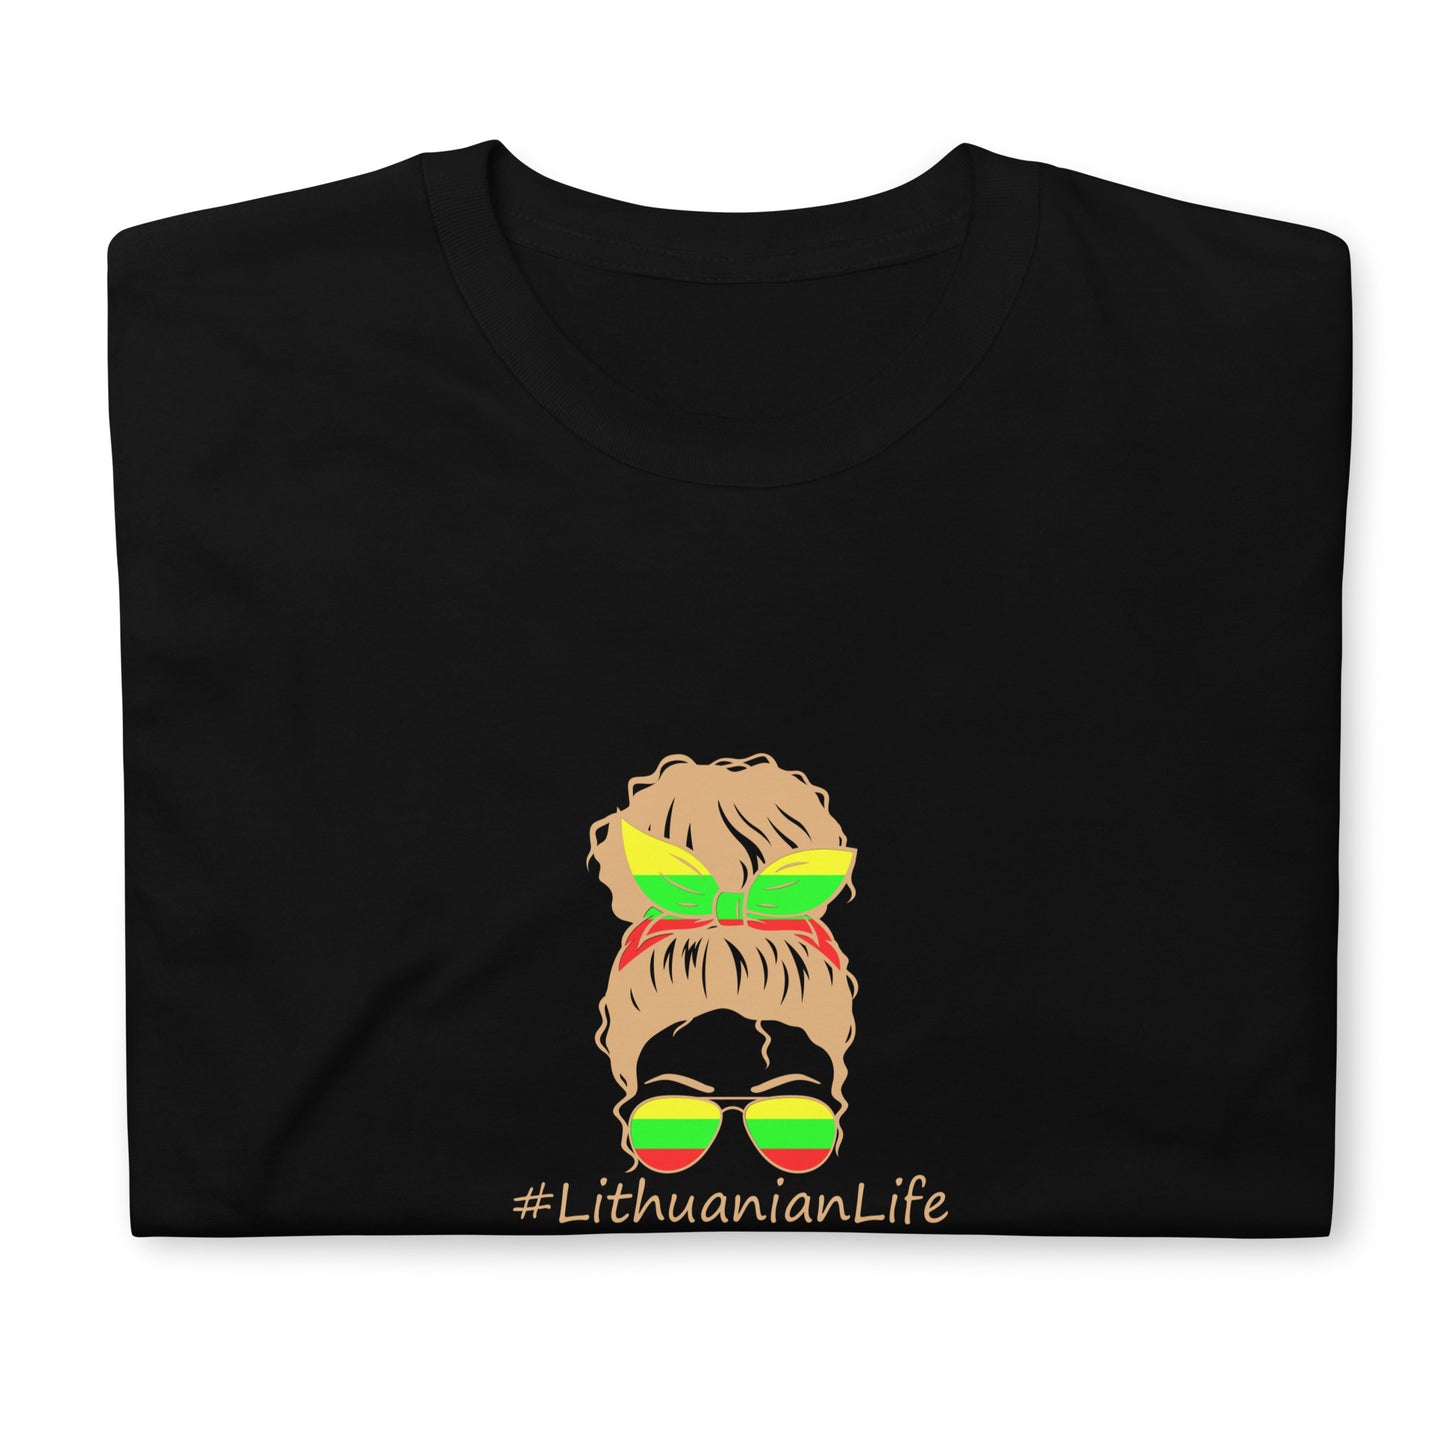 Unisex T-shirt: "Lithuanian Life"